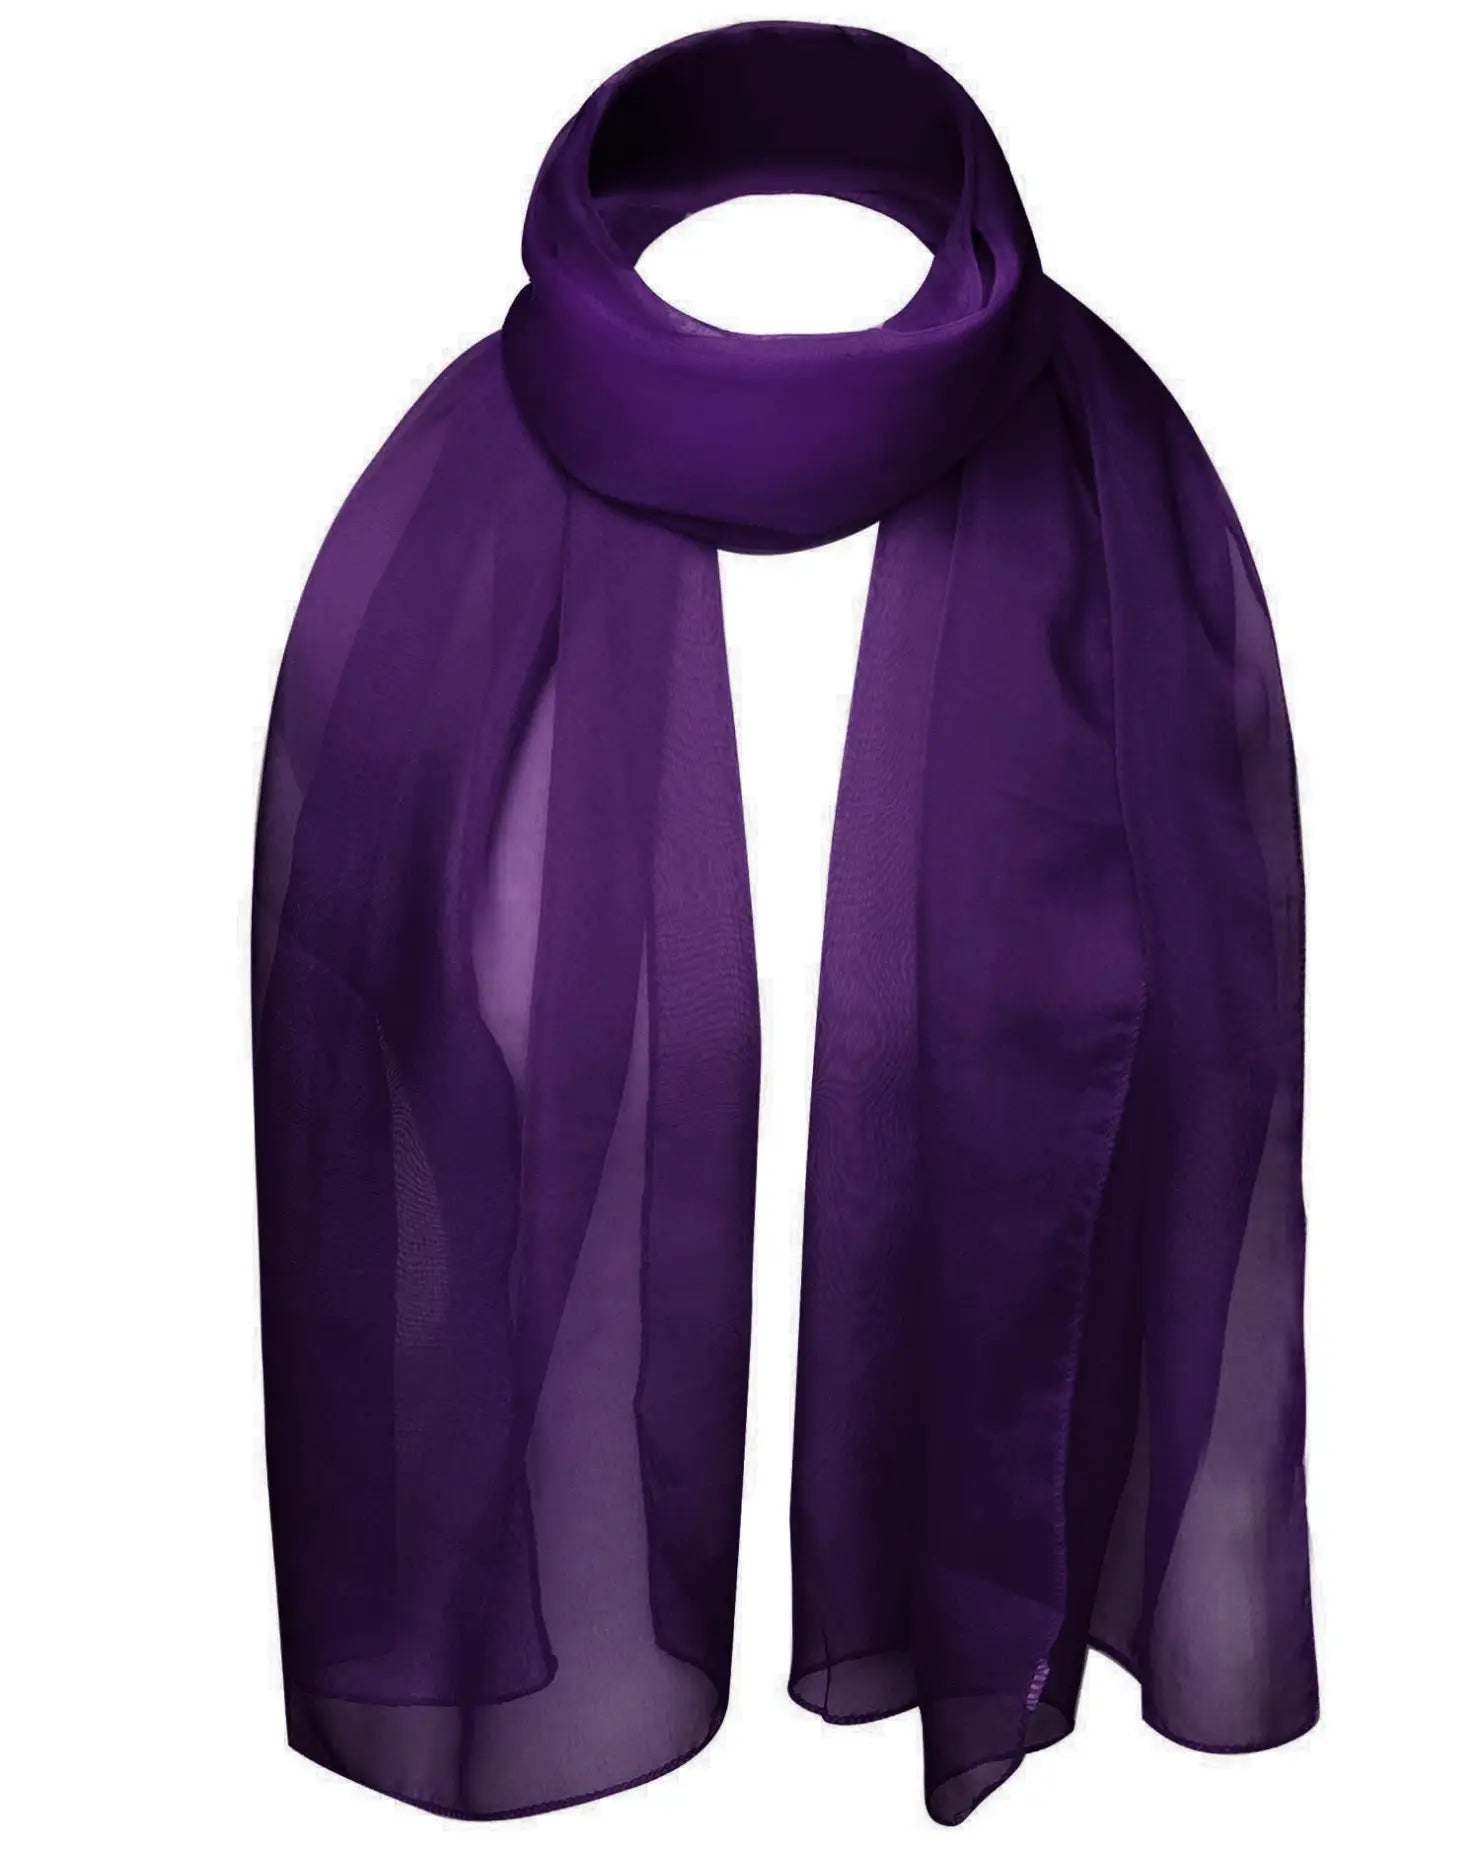 Luxurious Lightweight Chiffon Scarf: Classic Plain Design in Purple